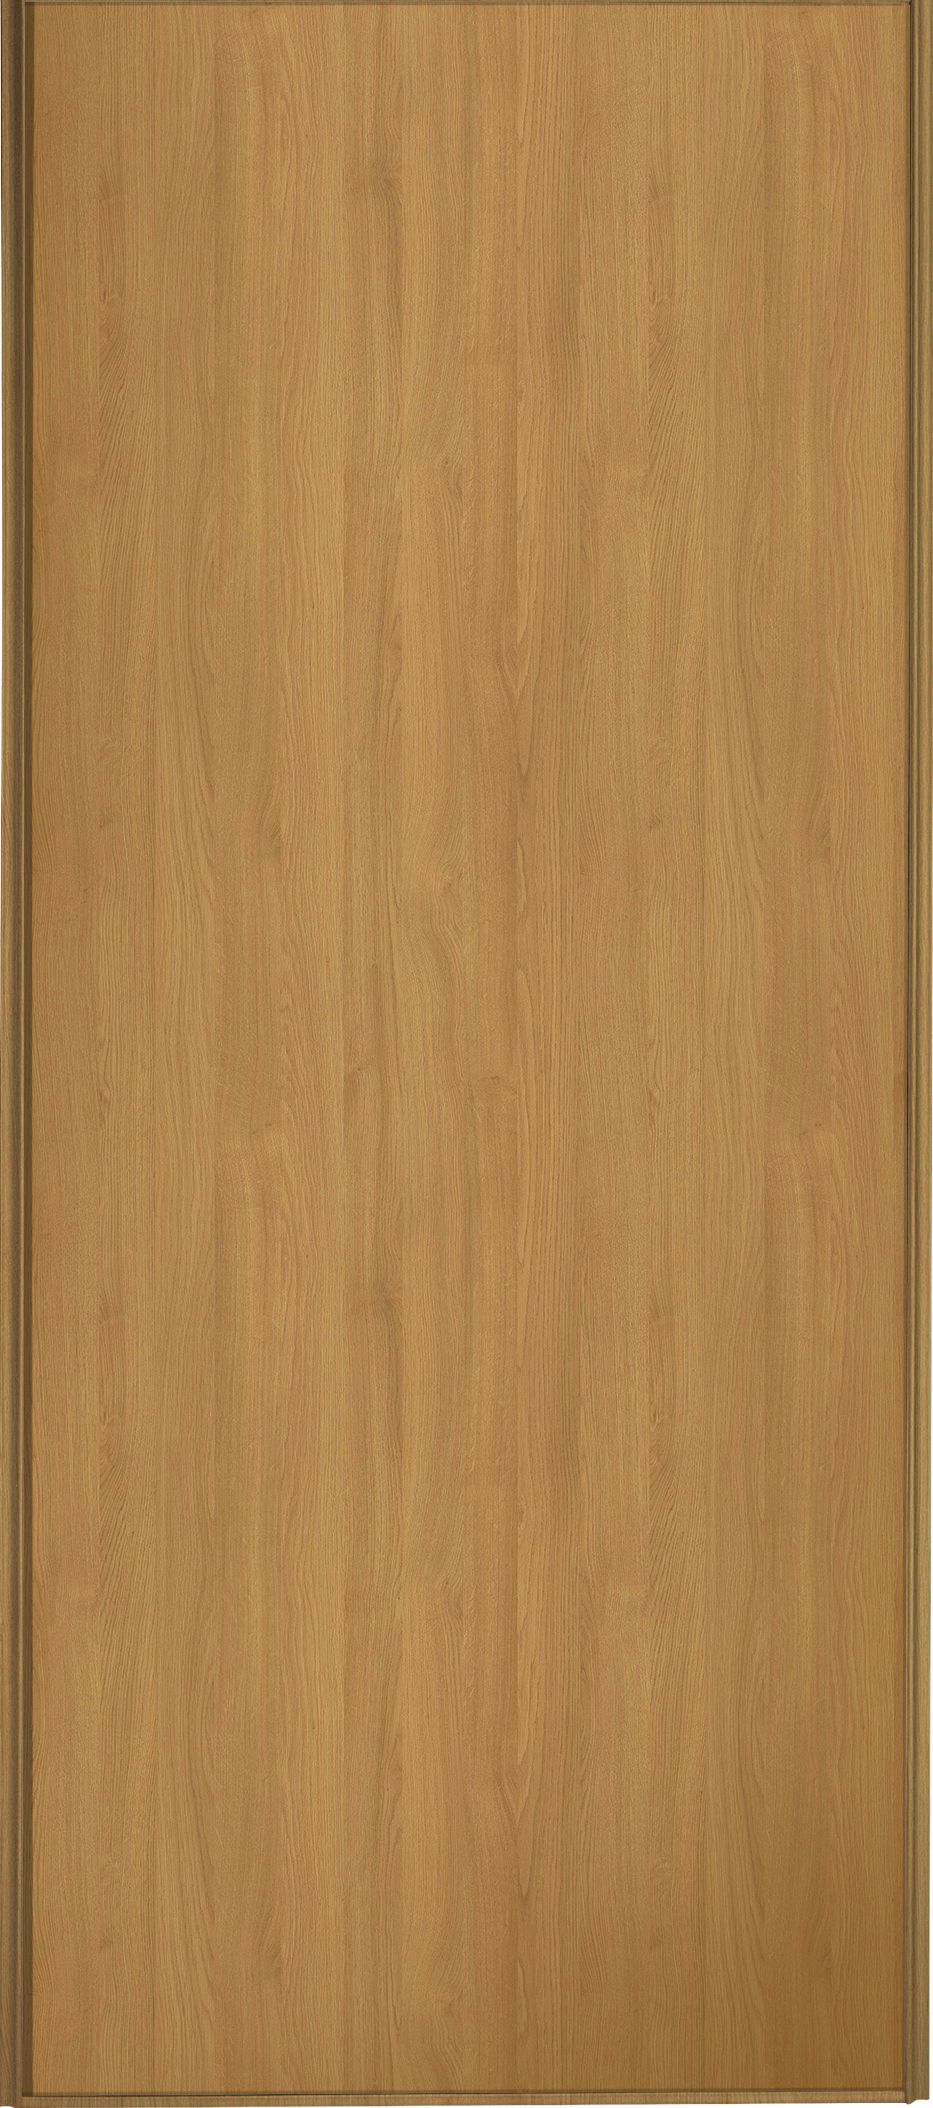 Image of Spacepro Sliding Wardrobe Door Oak Frame & Panel - 2220 x 914mm